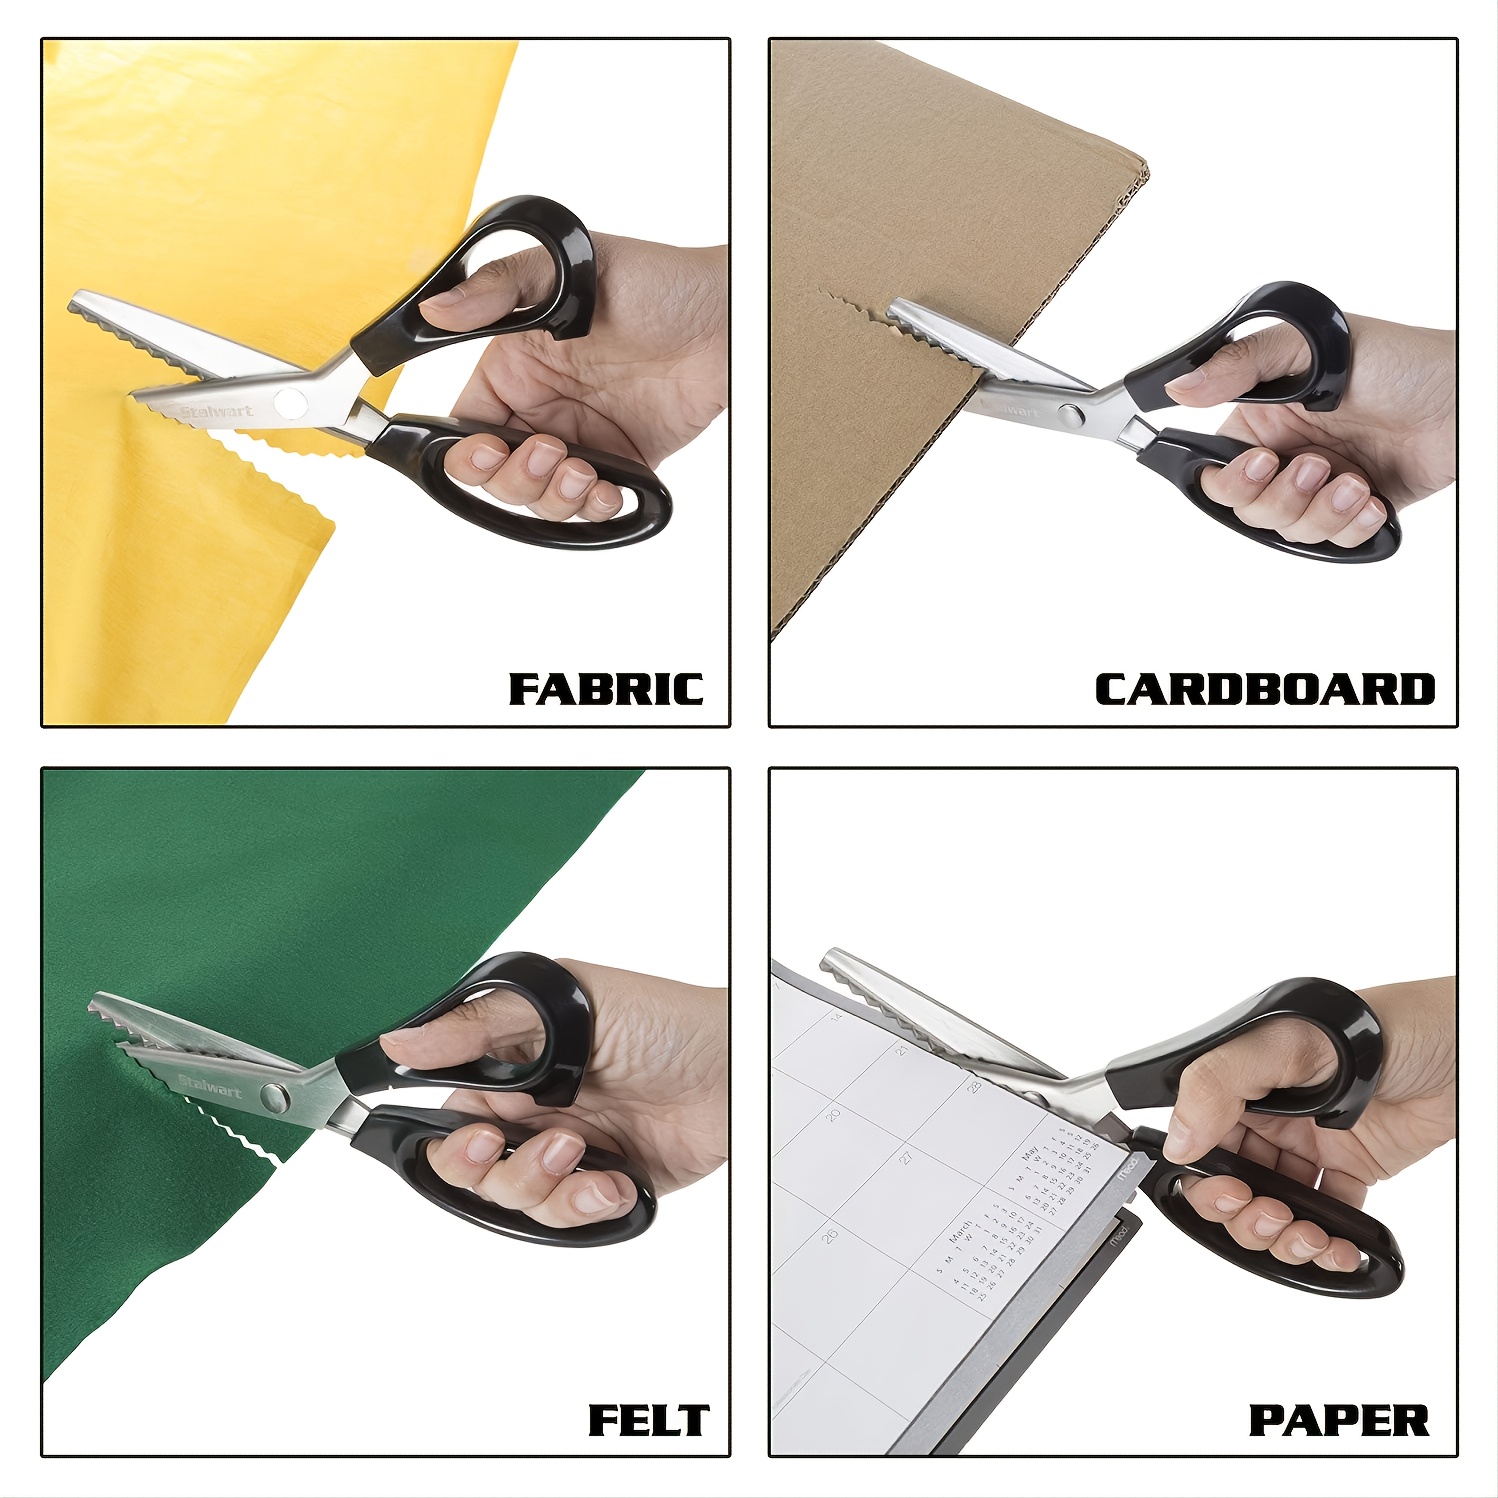 Cardboard Scissors 